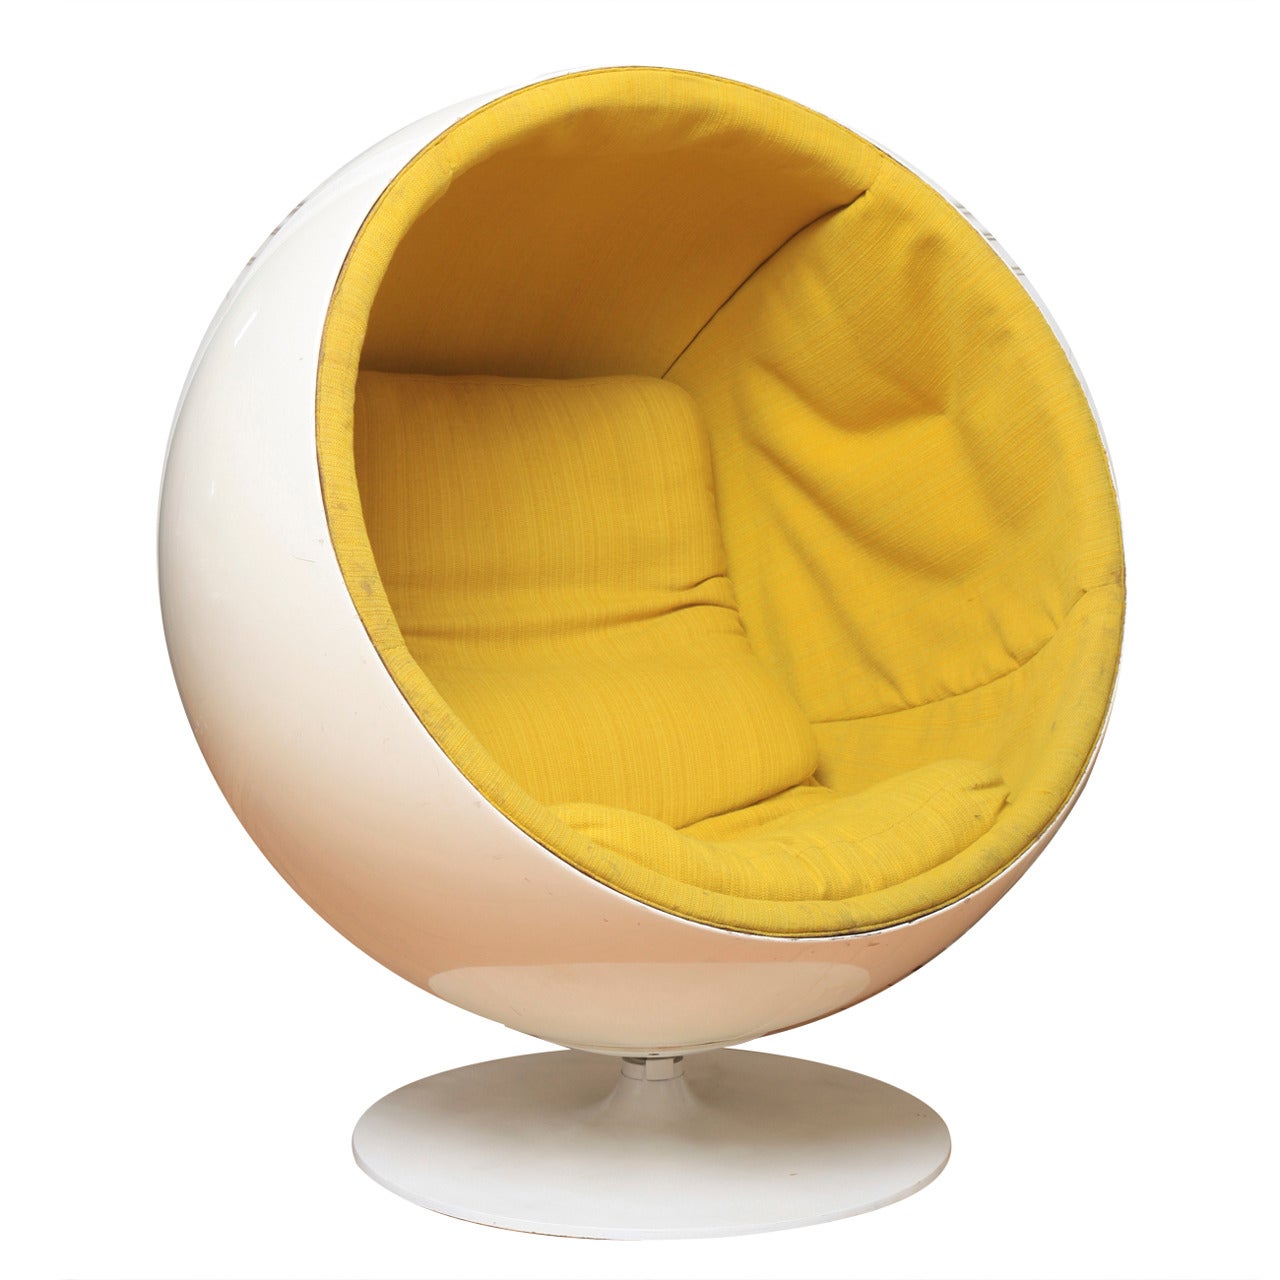 Ball chair by Eero Aarnio